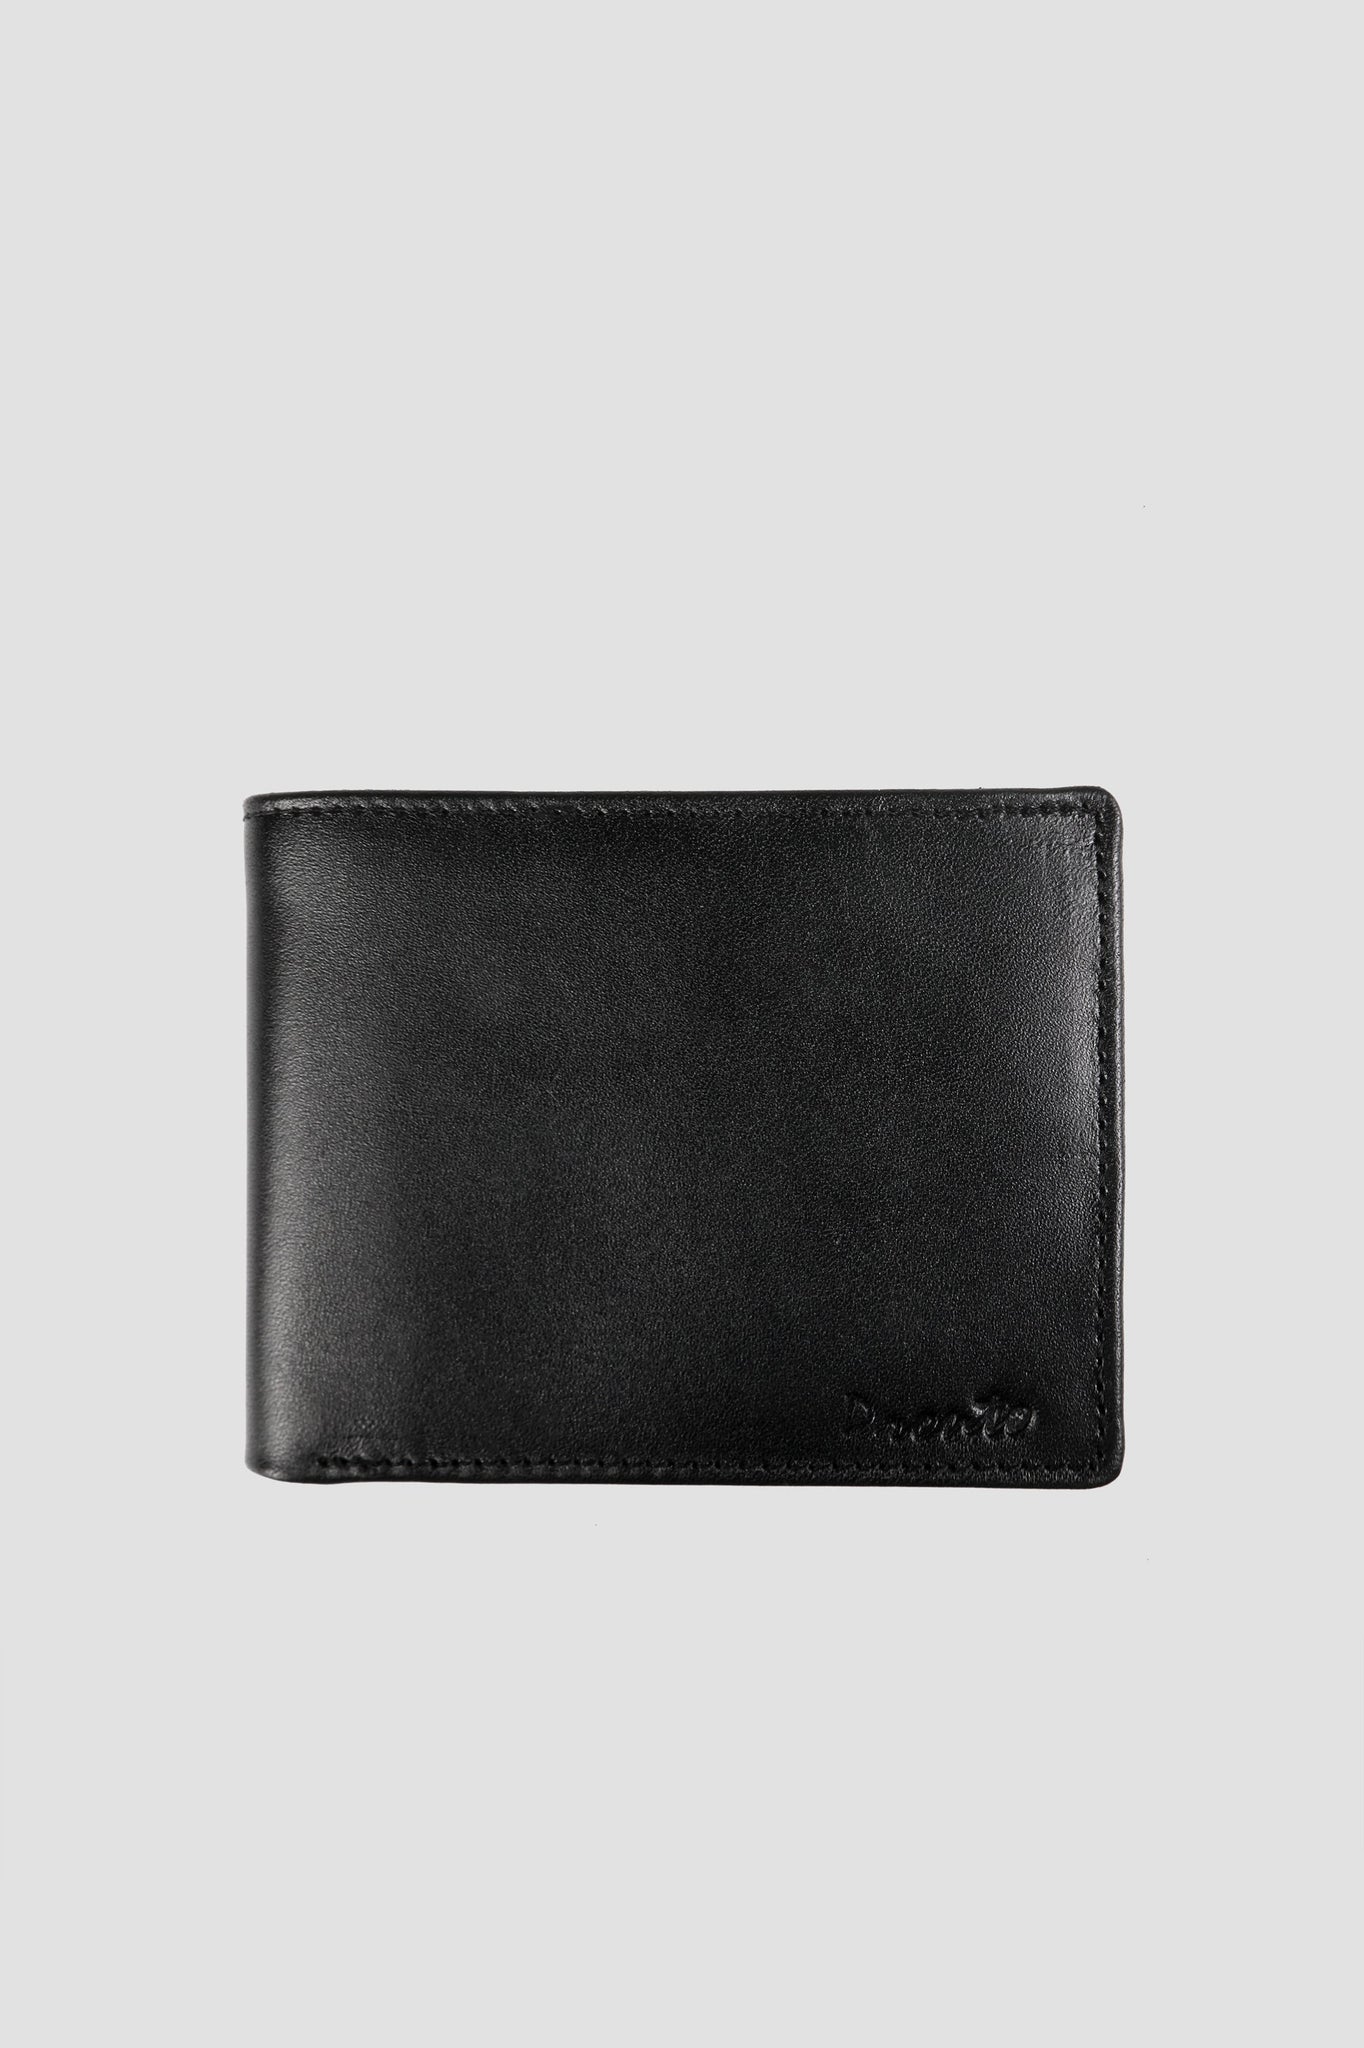 Pronto Statement Genuine Leather Wallet